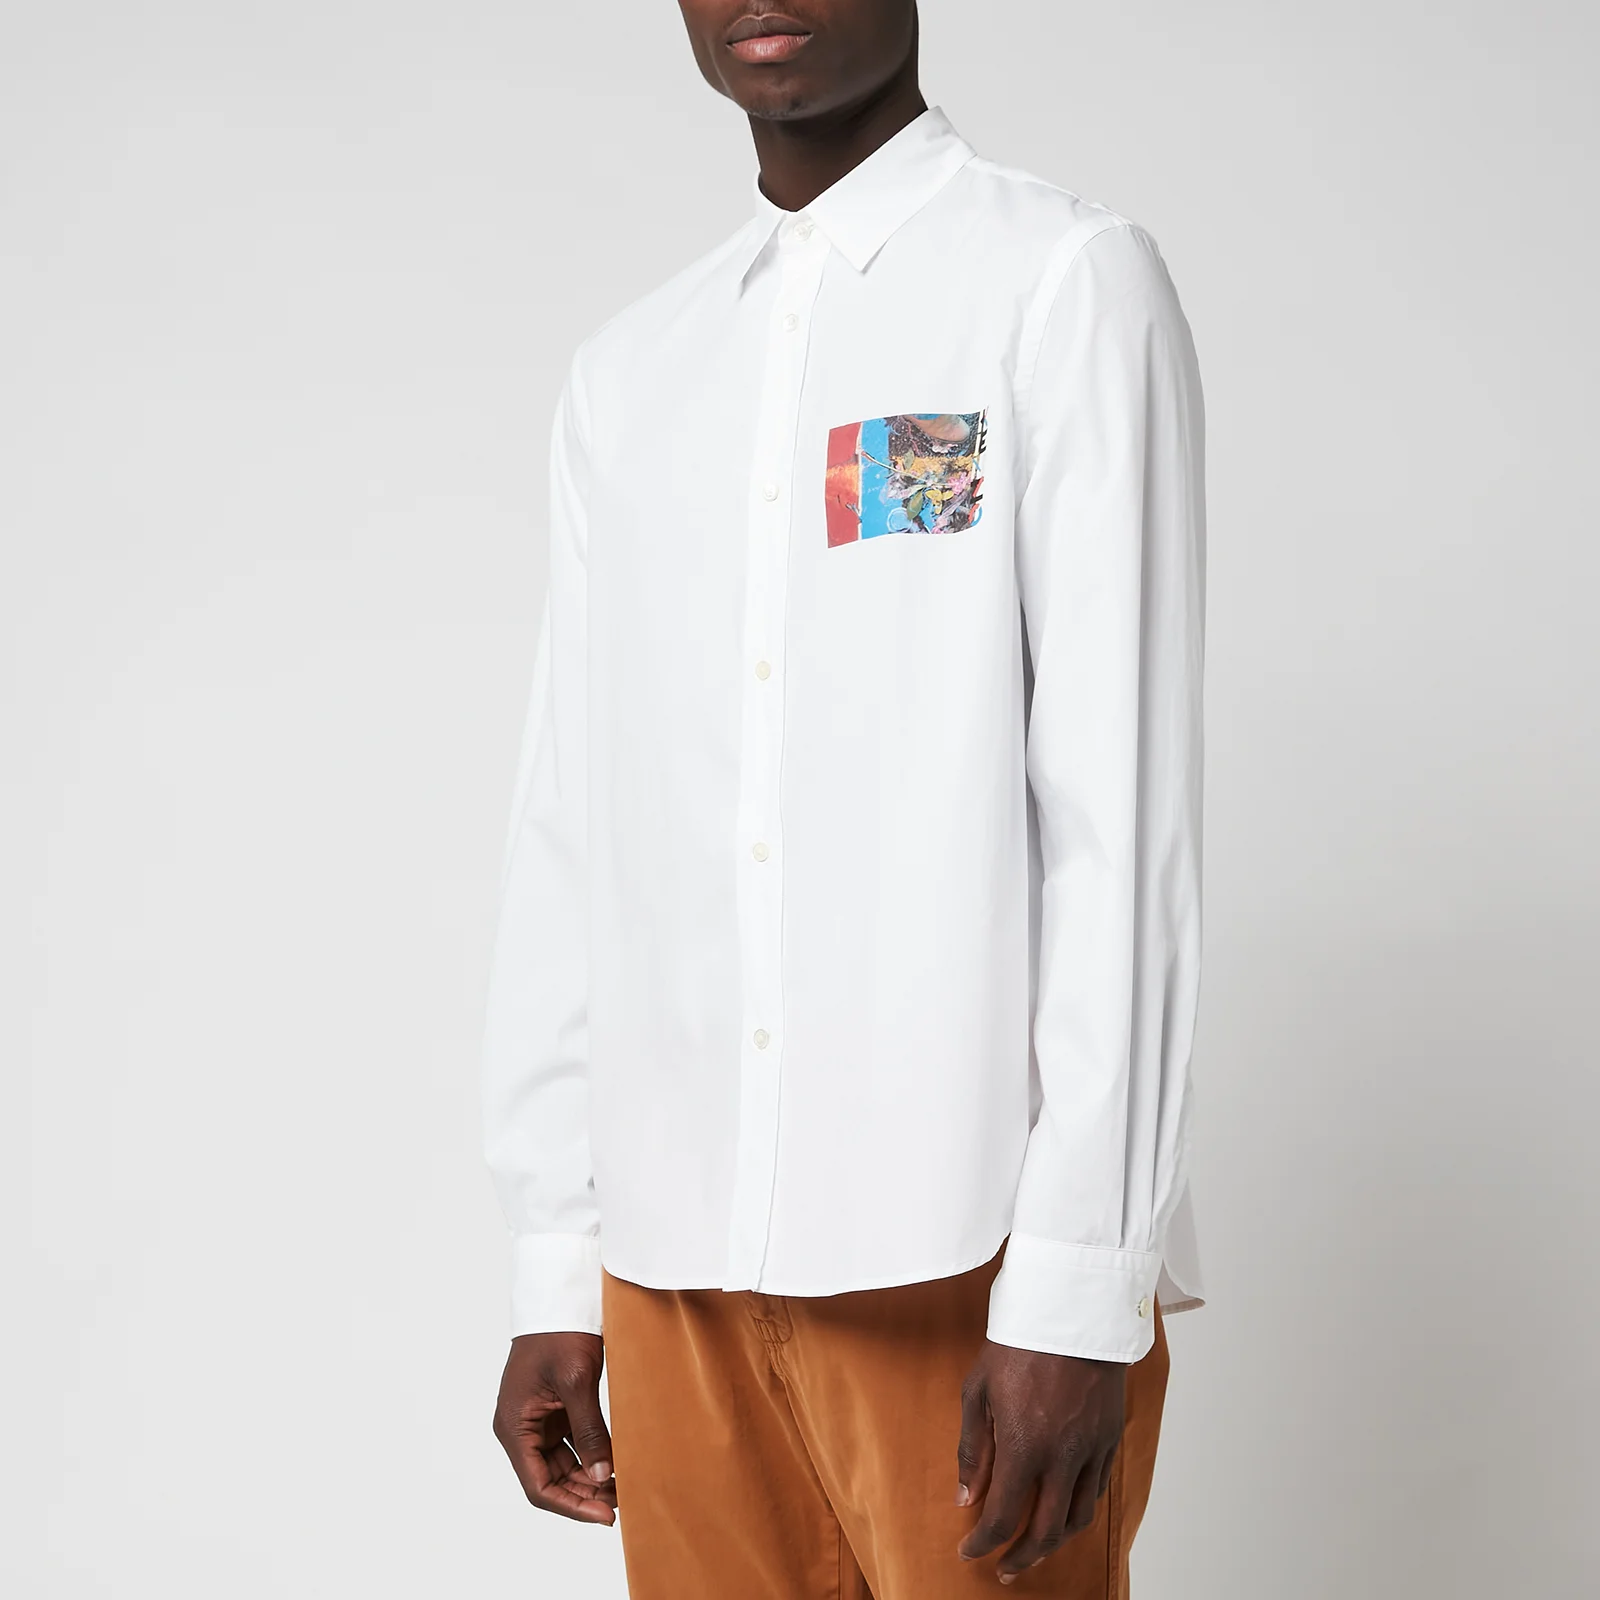 KENZO Men's Casual Shirt - White Image 1